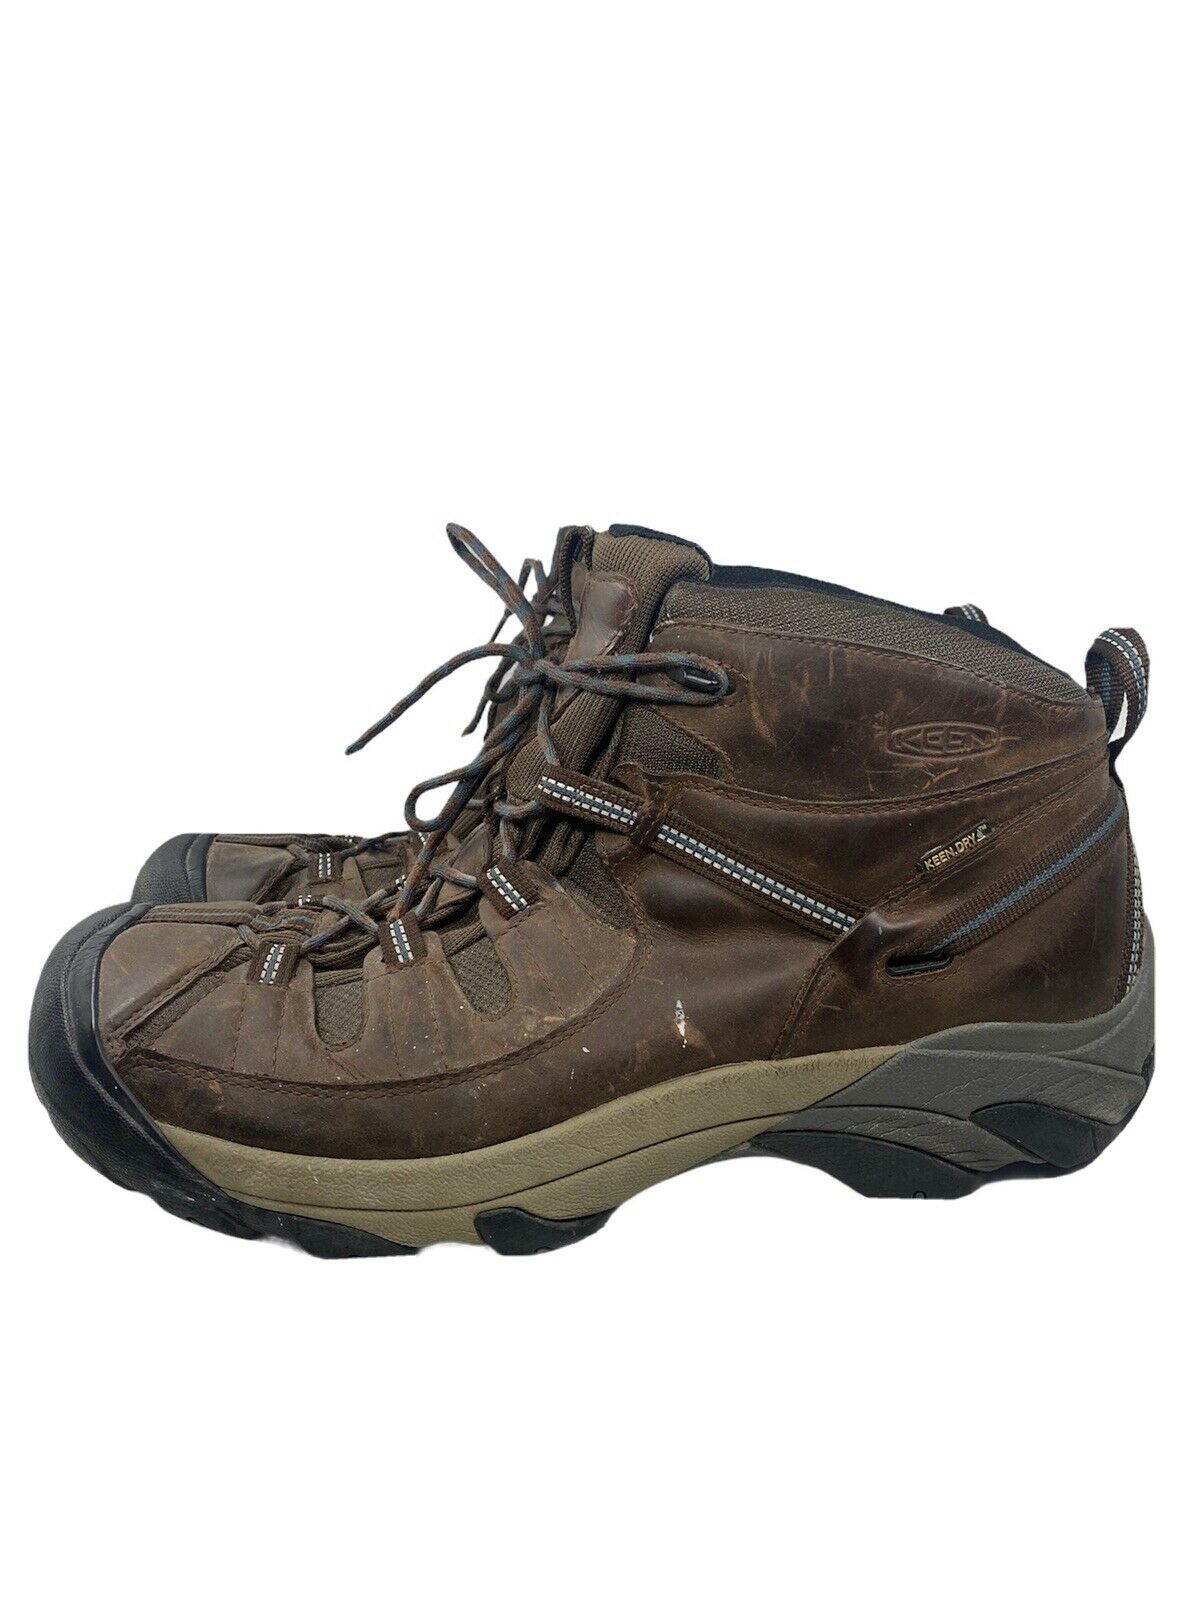 KEEN 1217 WLCB KeenDry Waterproof Outdoor Leather Hiking Work Boots Mens Sz 15